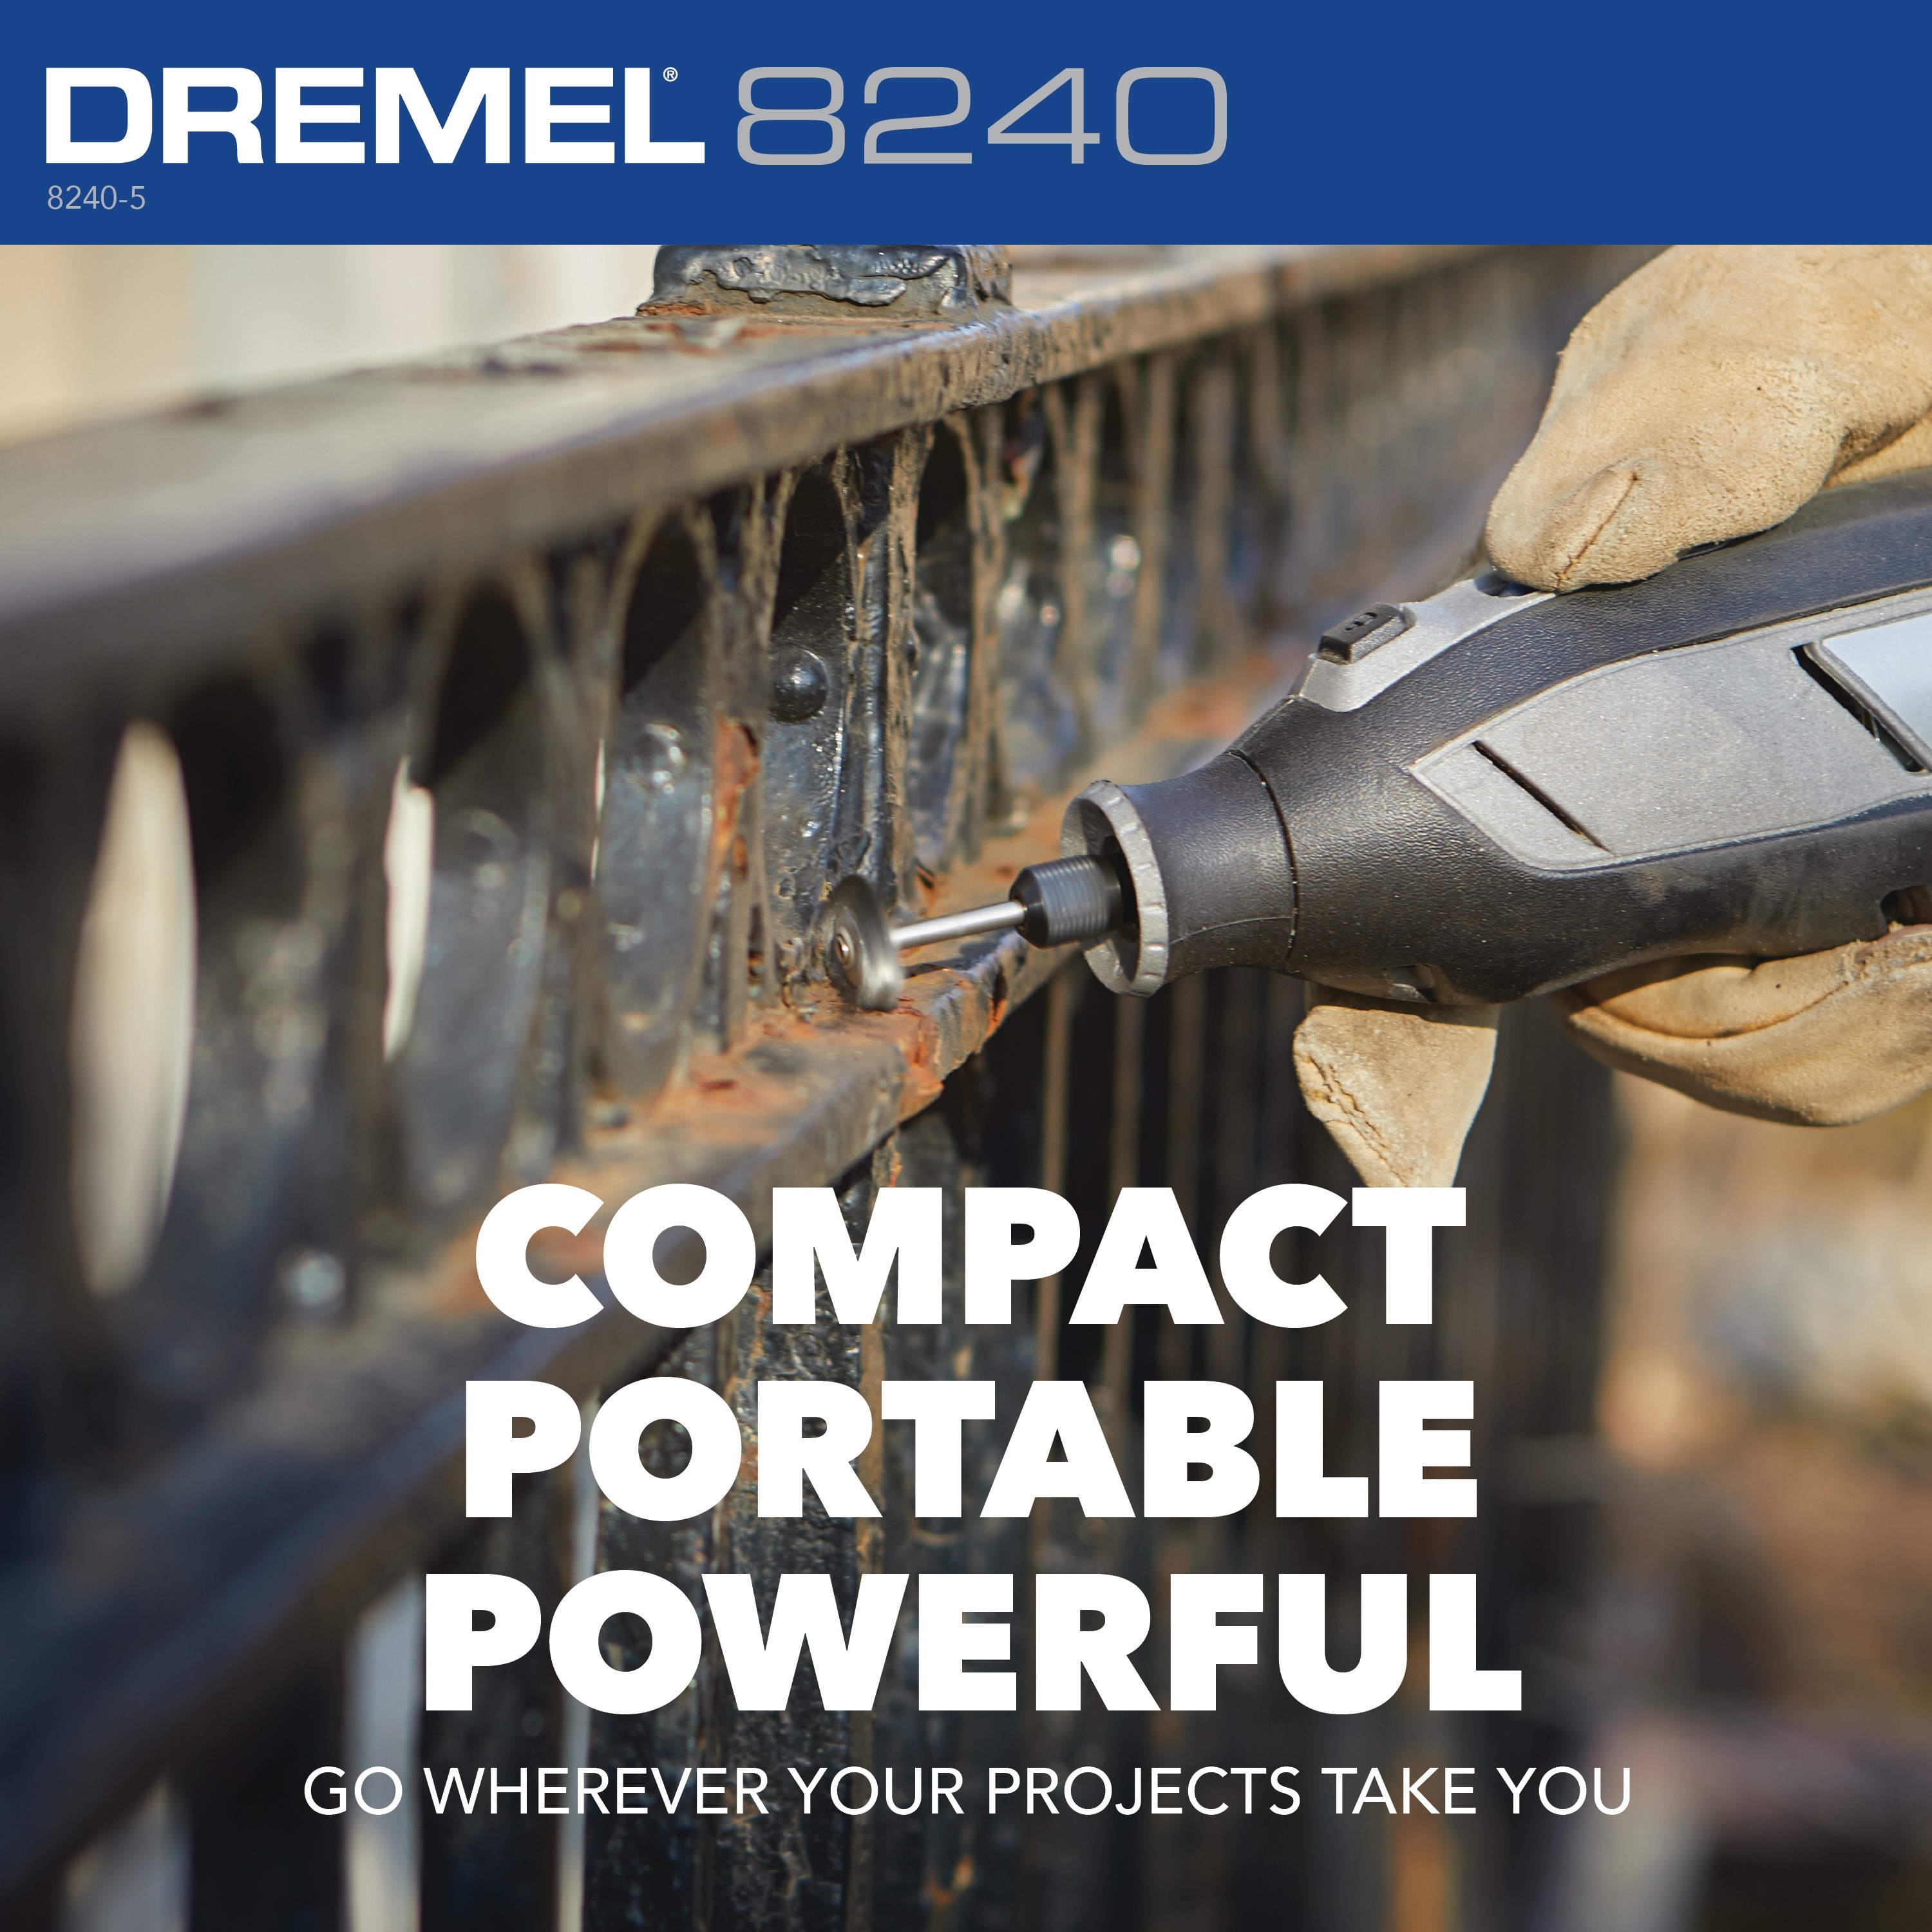 Dremel 8240 Variable Speed Cordless 12-volt 2-Amp Multipurpose Rotary Tool  Kit